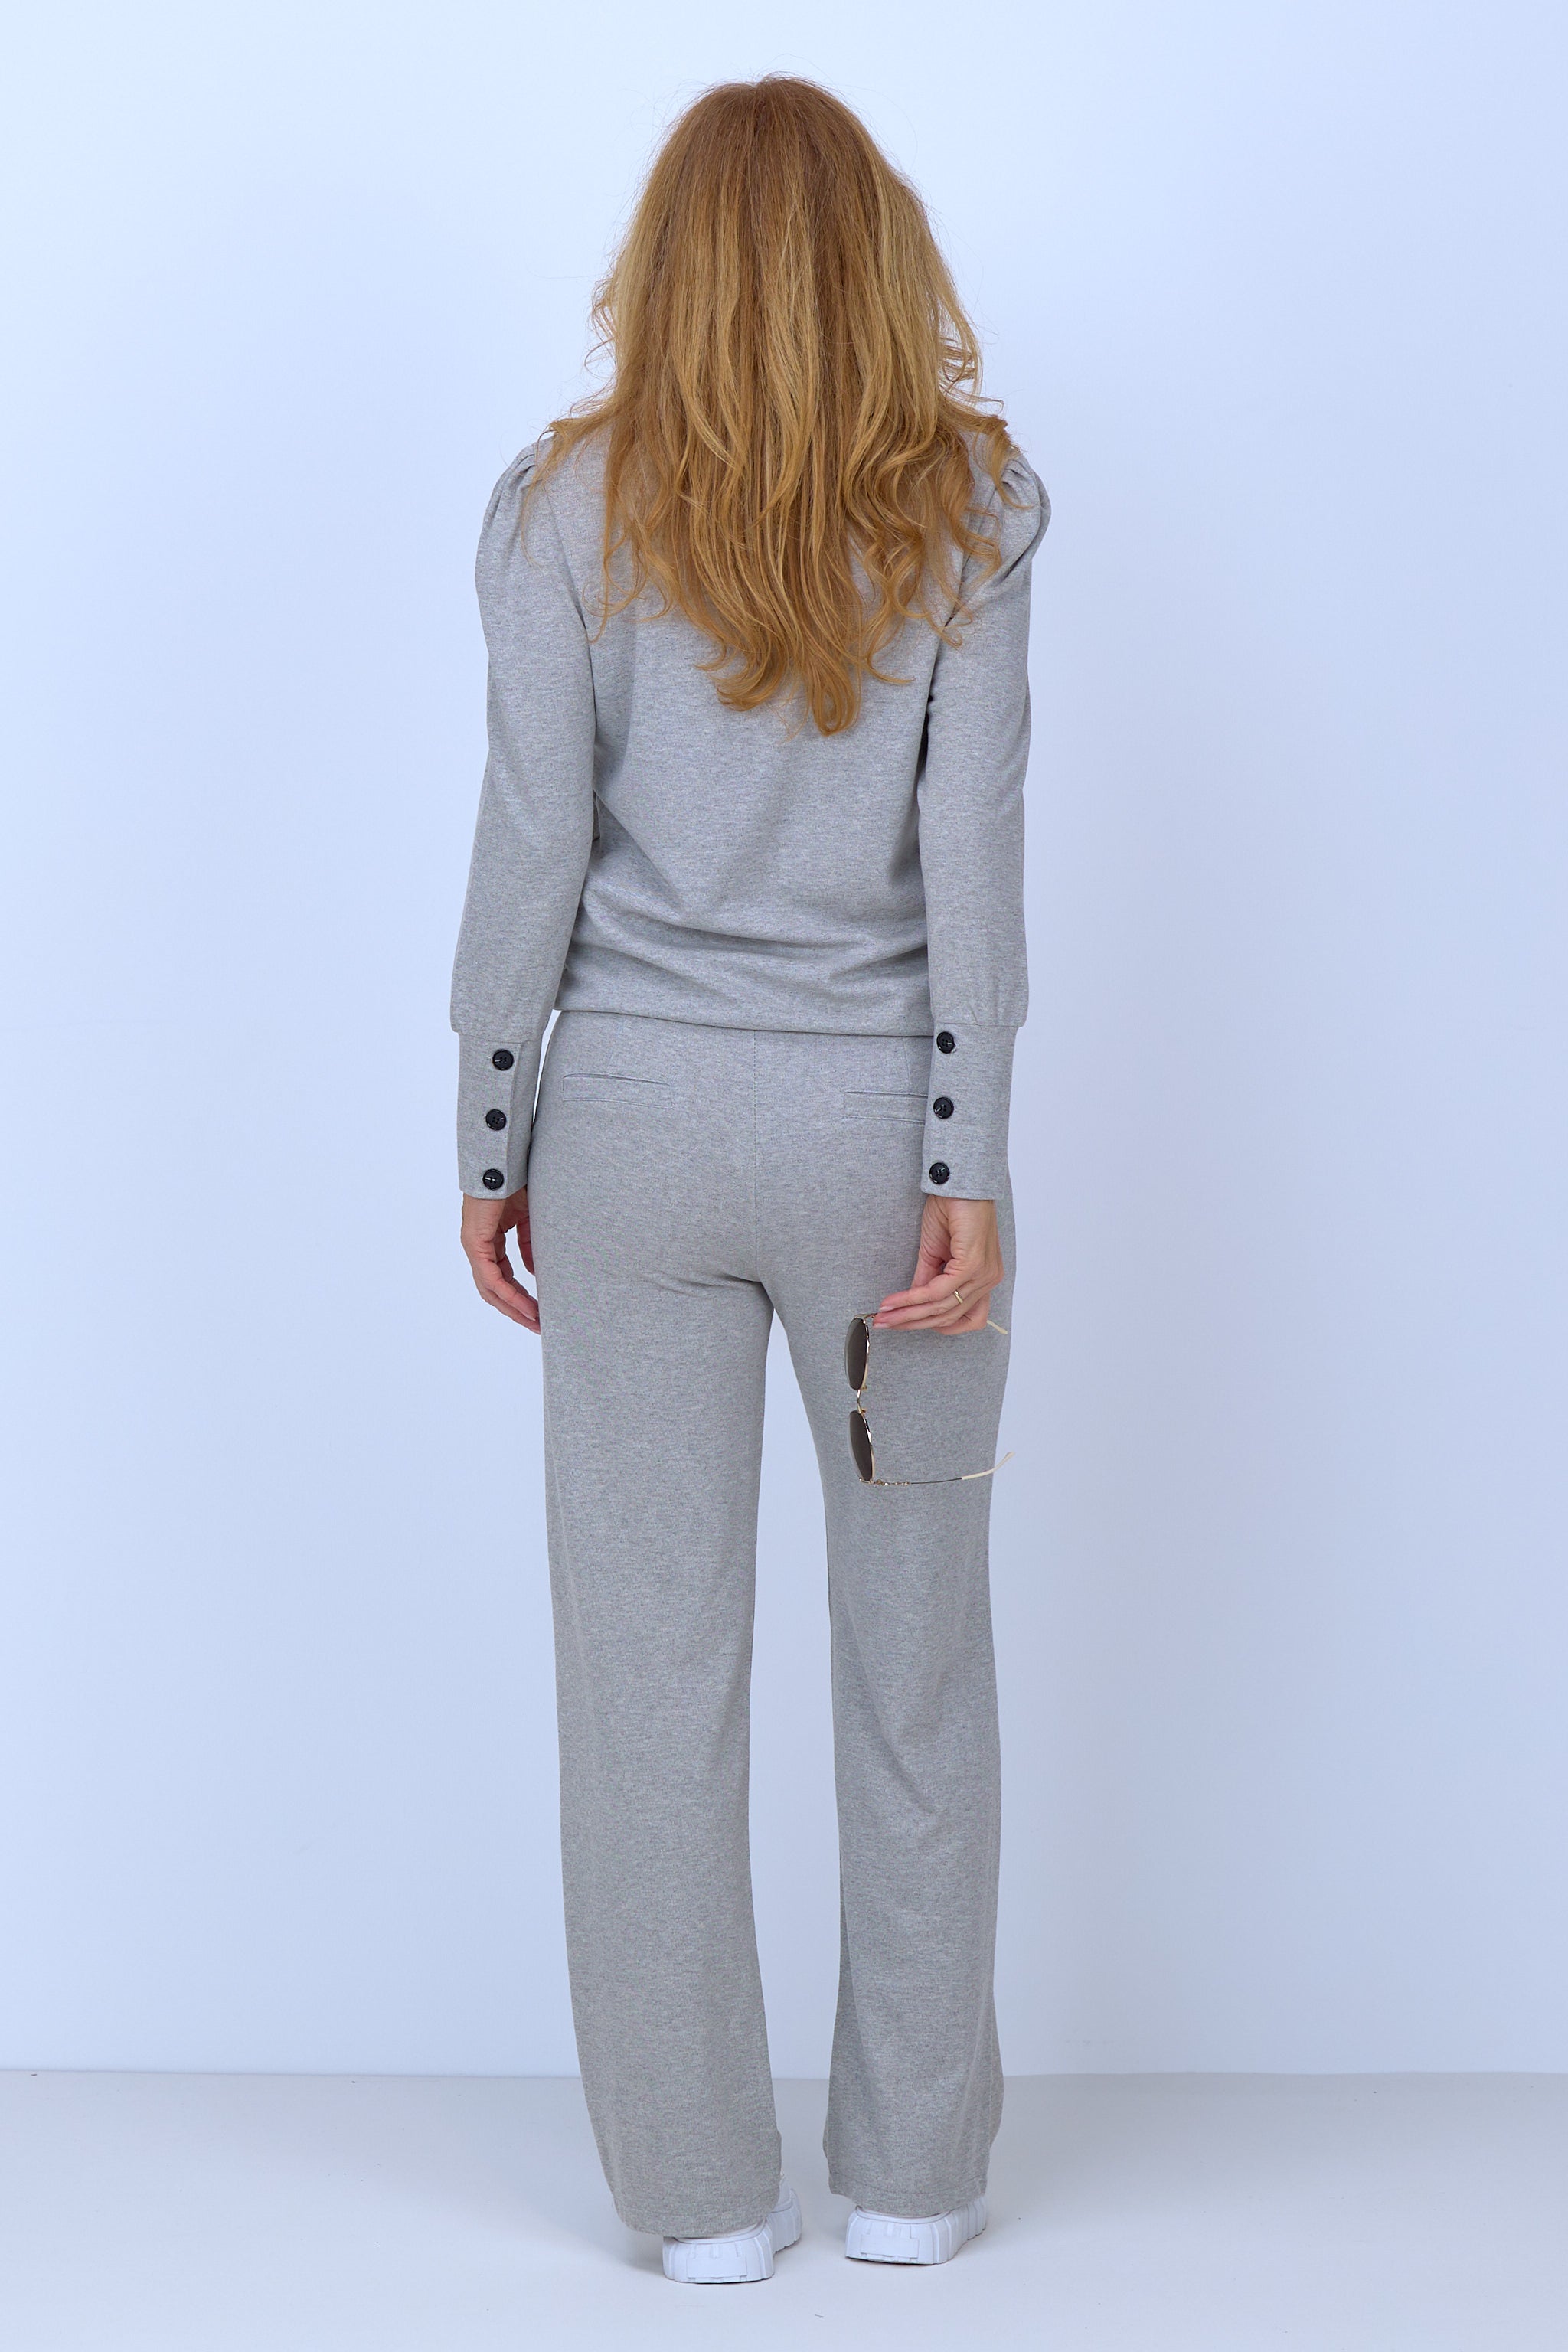 Pants in Marlene style, light grey mottled